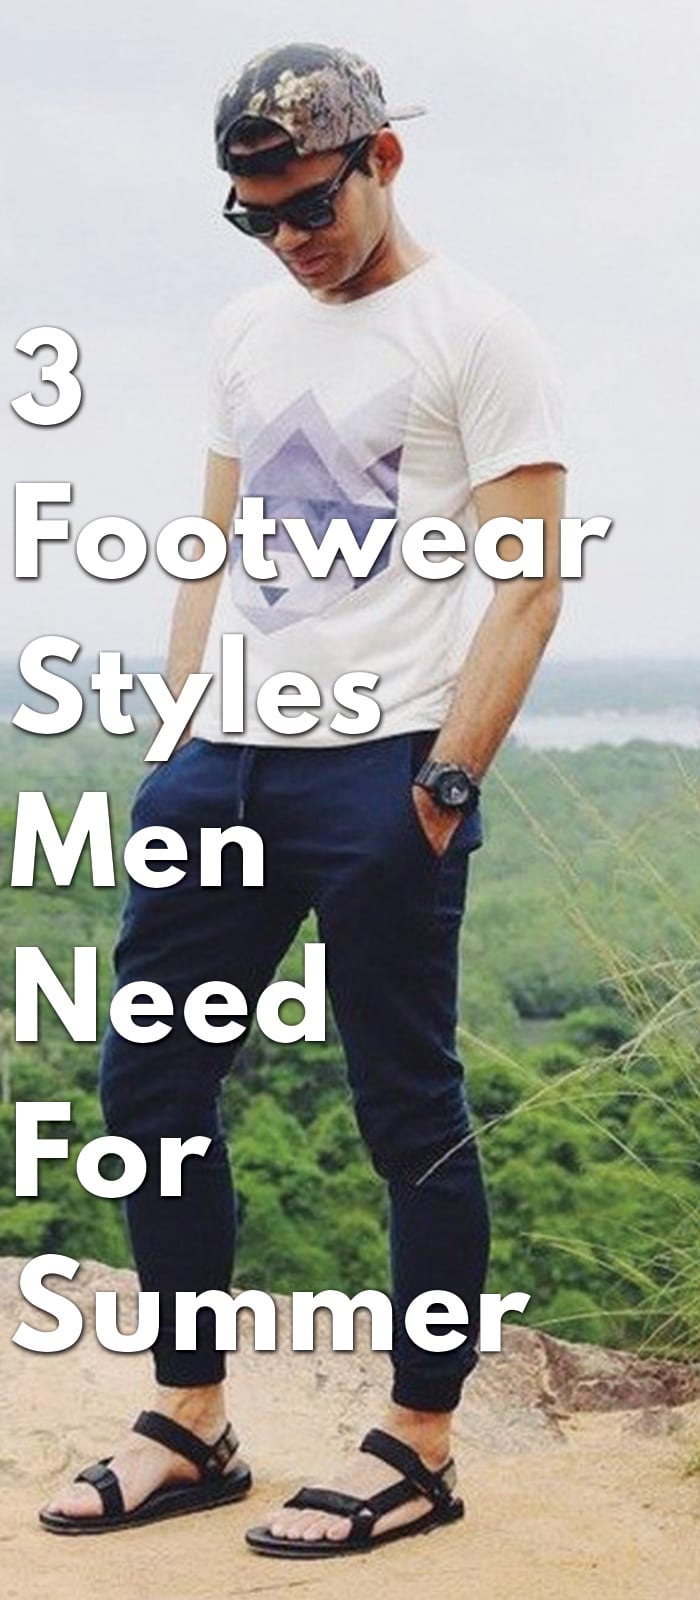 3-Footwear-Styles-Men-Need-For-Summer-2018